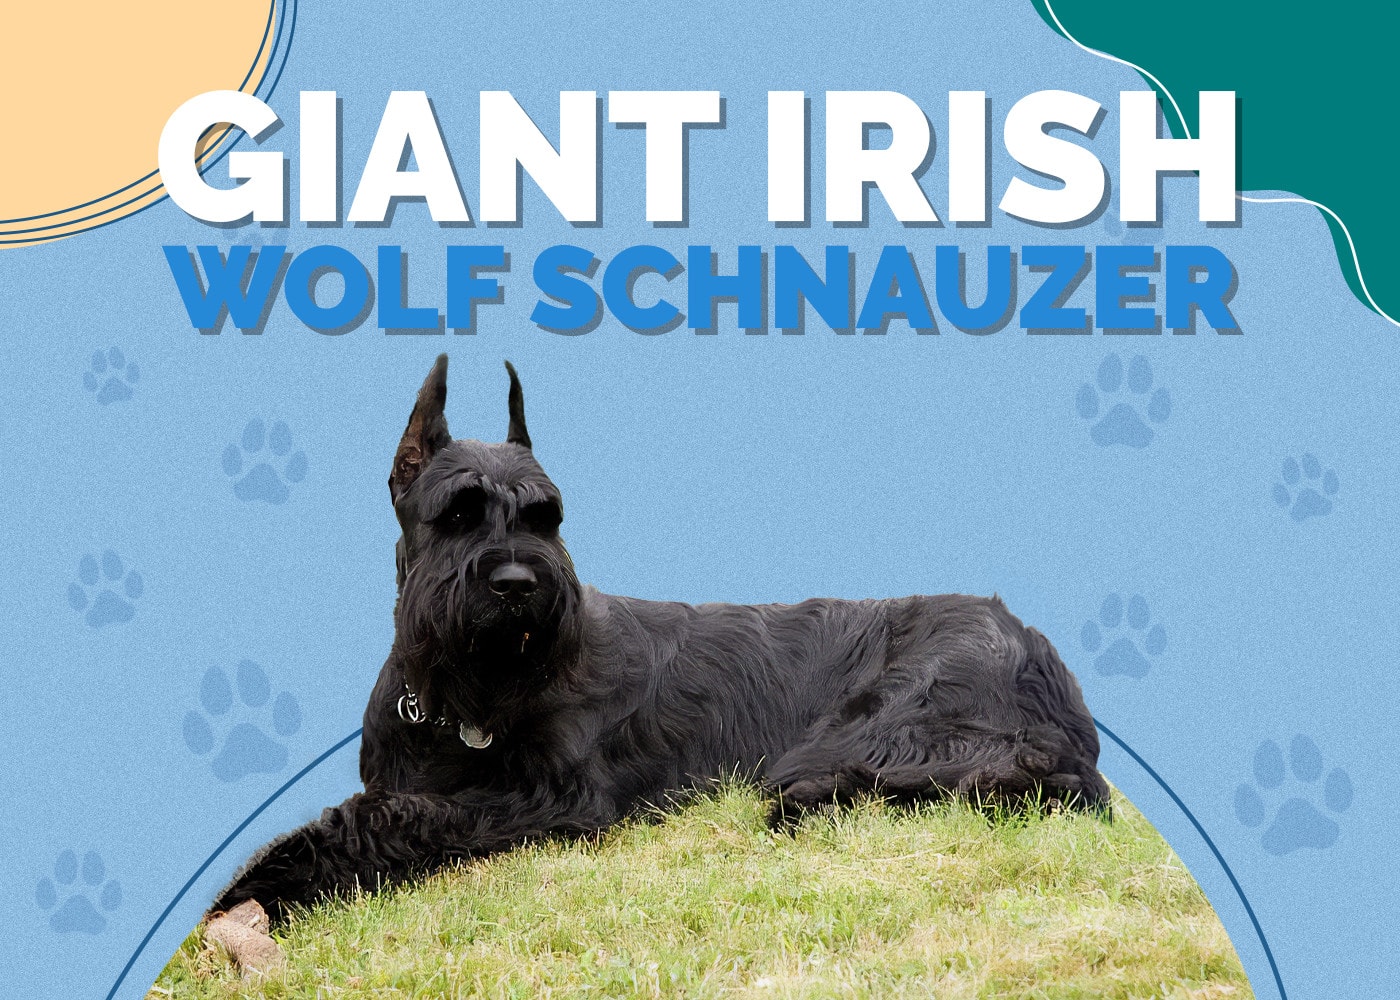 Giant Irish Wolf Schnauzer (Giant Schnauzer & Irish Wolfhound Mix)